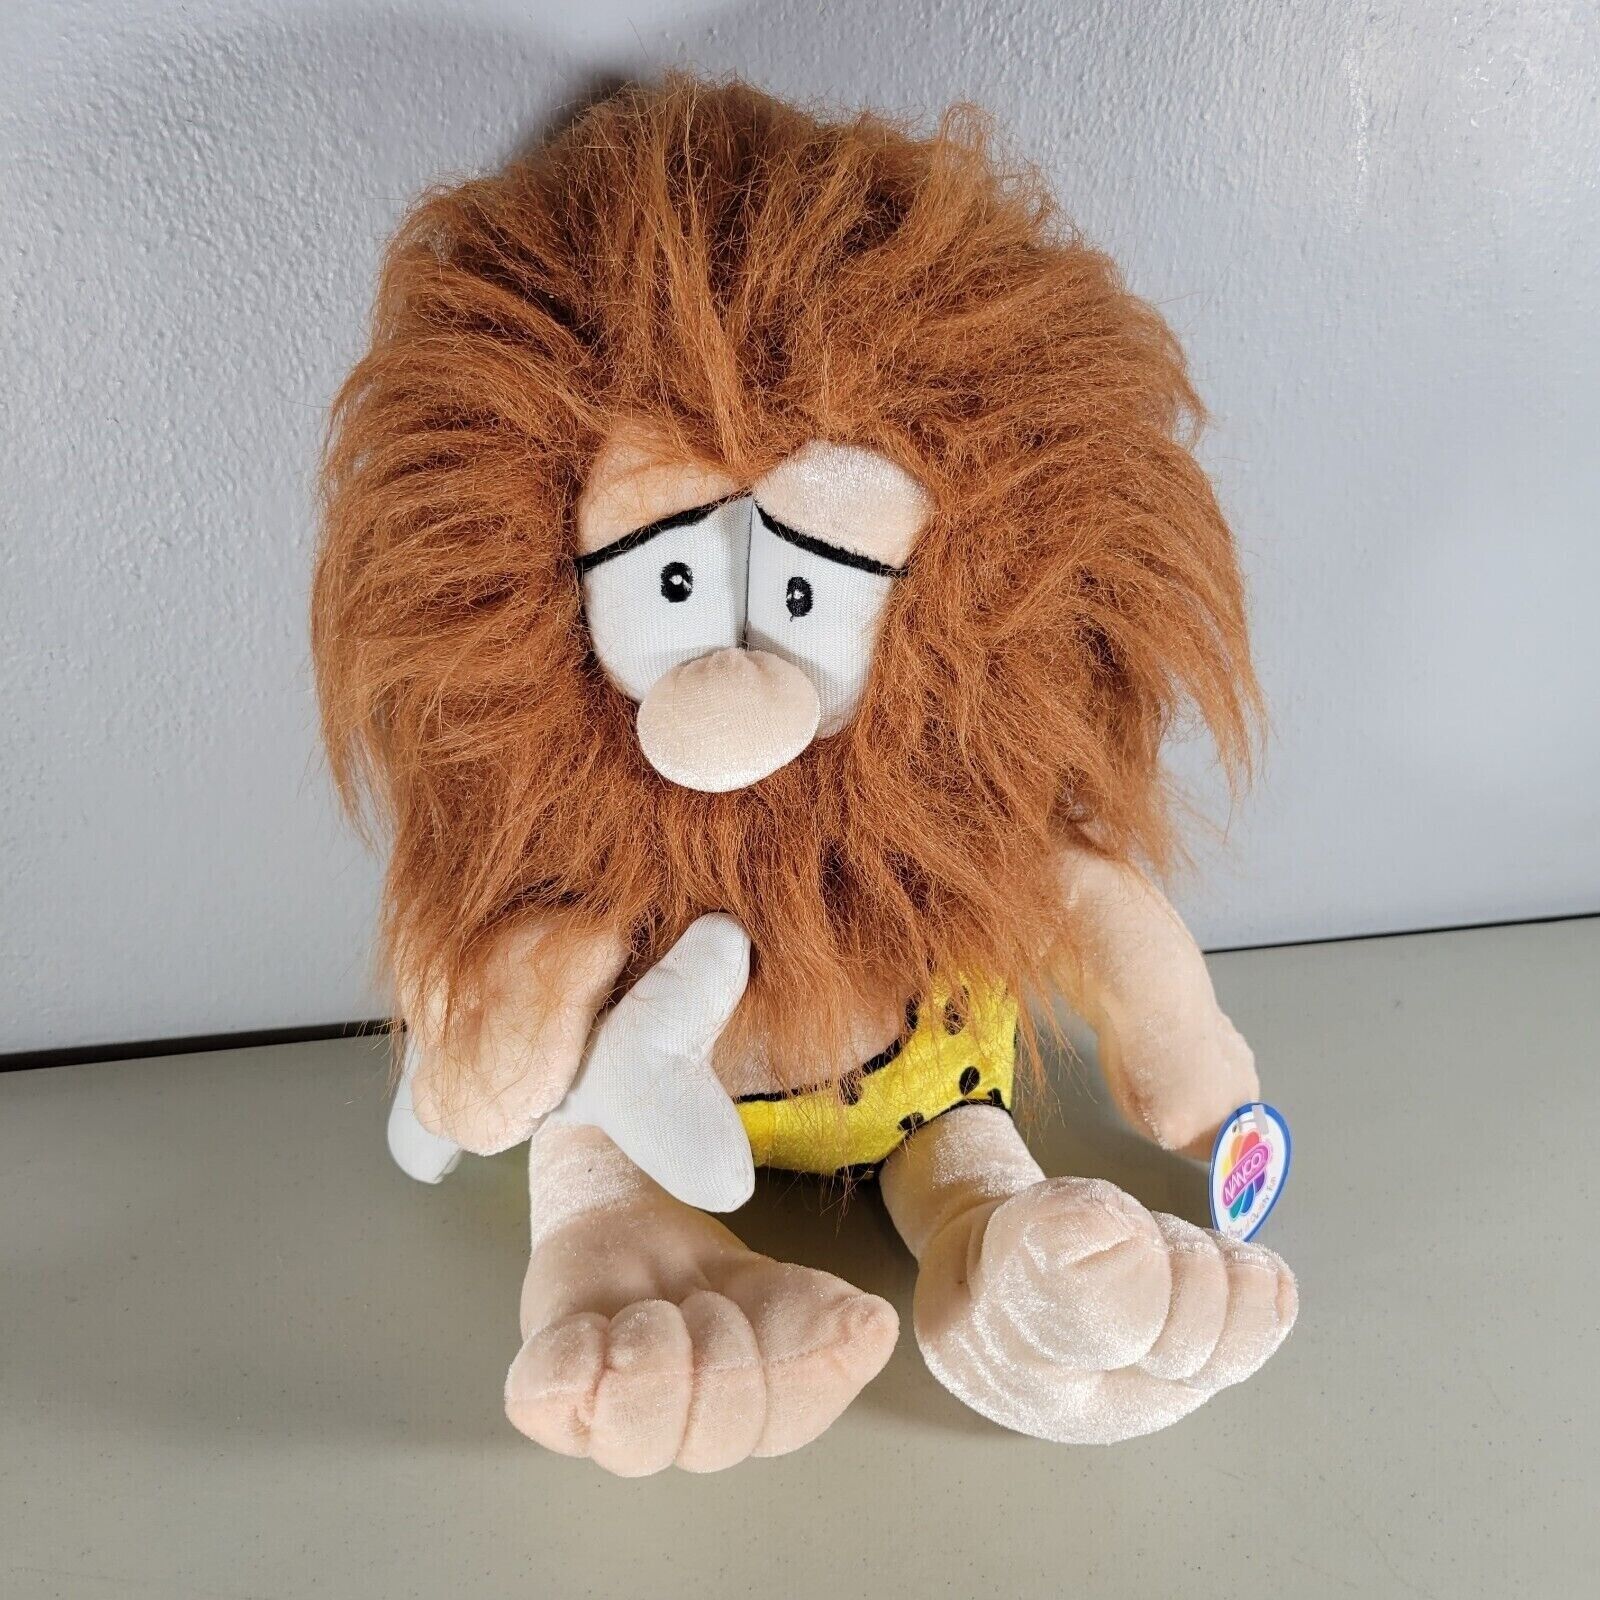 Caveman Plush Stuffed Animal Hairy Cave Man Doll 2004 Vintage Nanco with Tag - $12.68